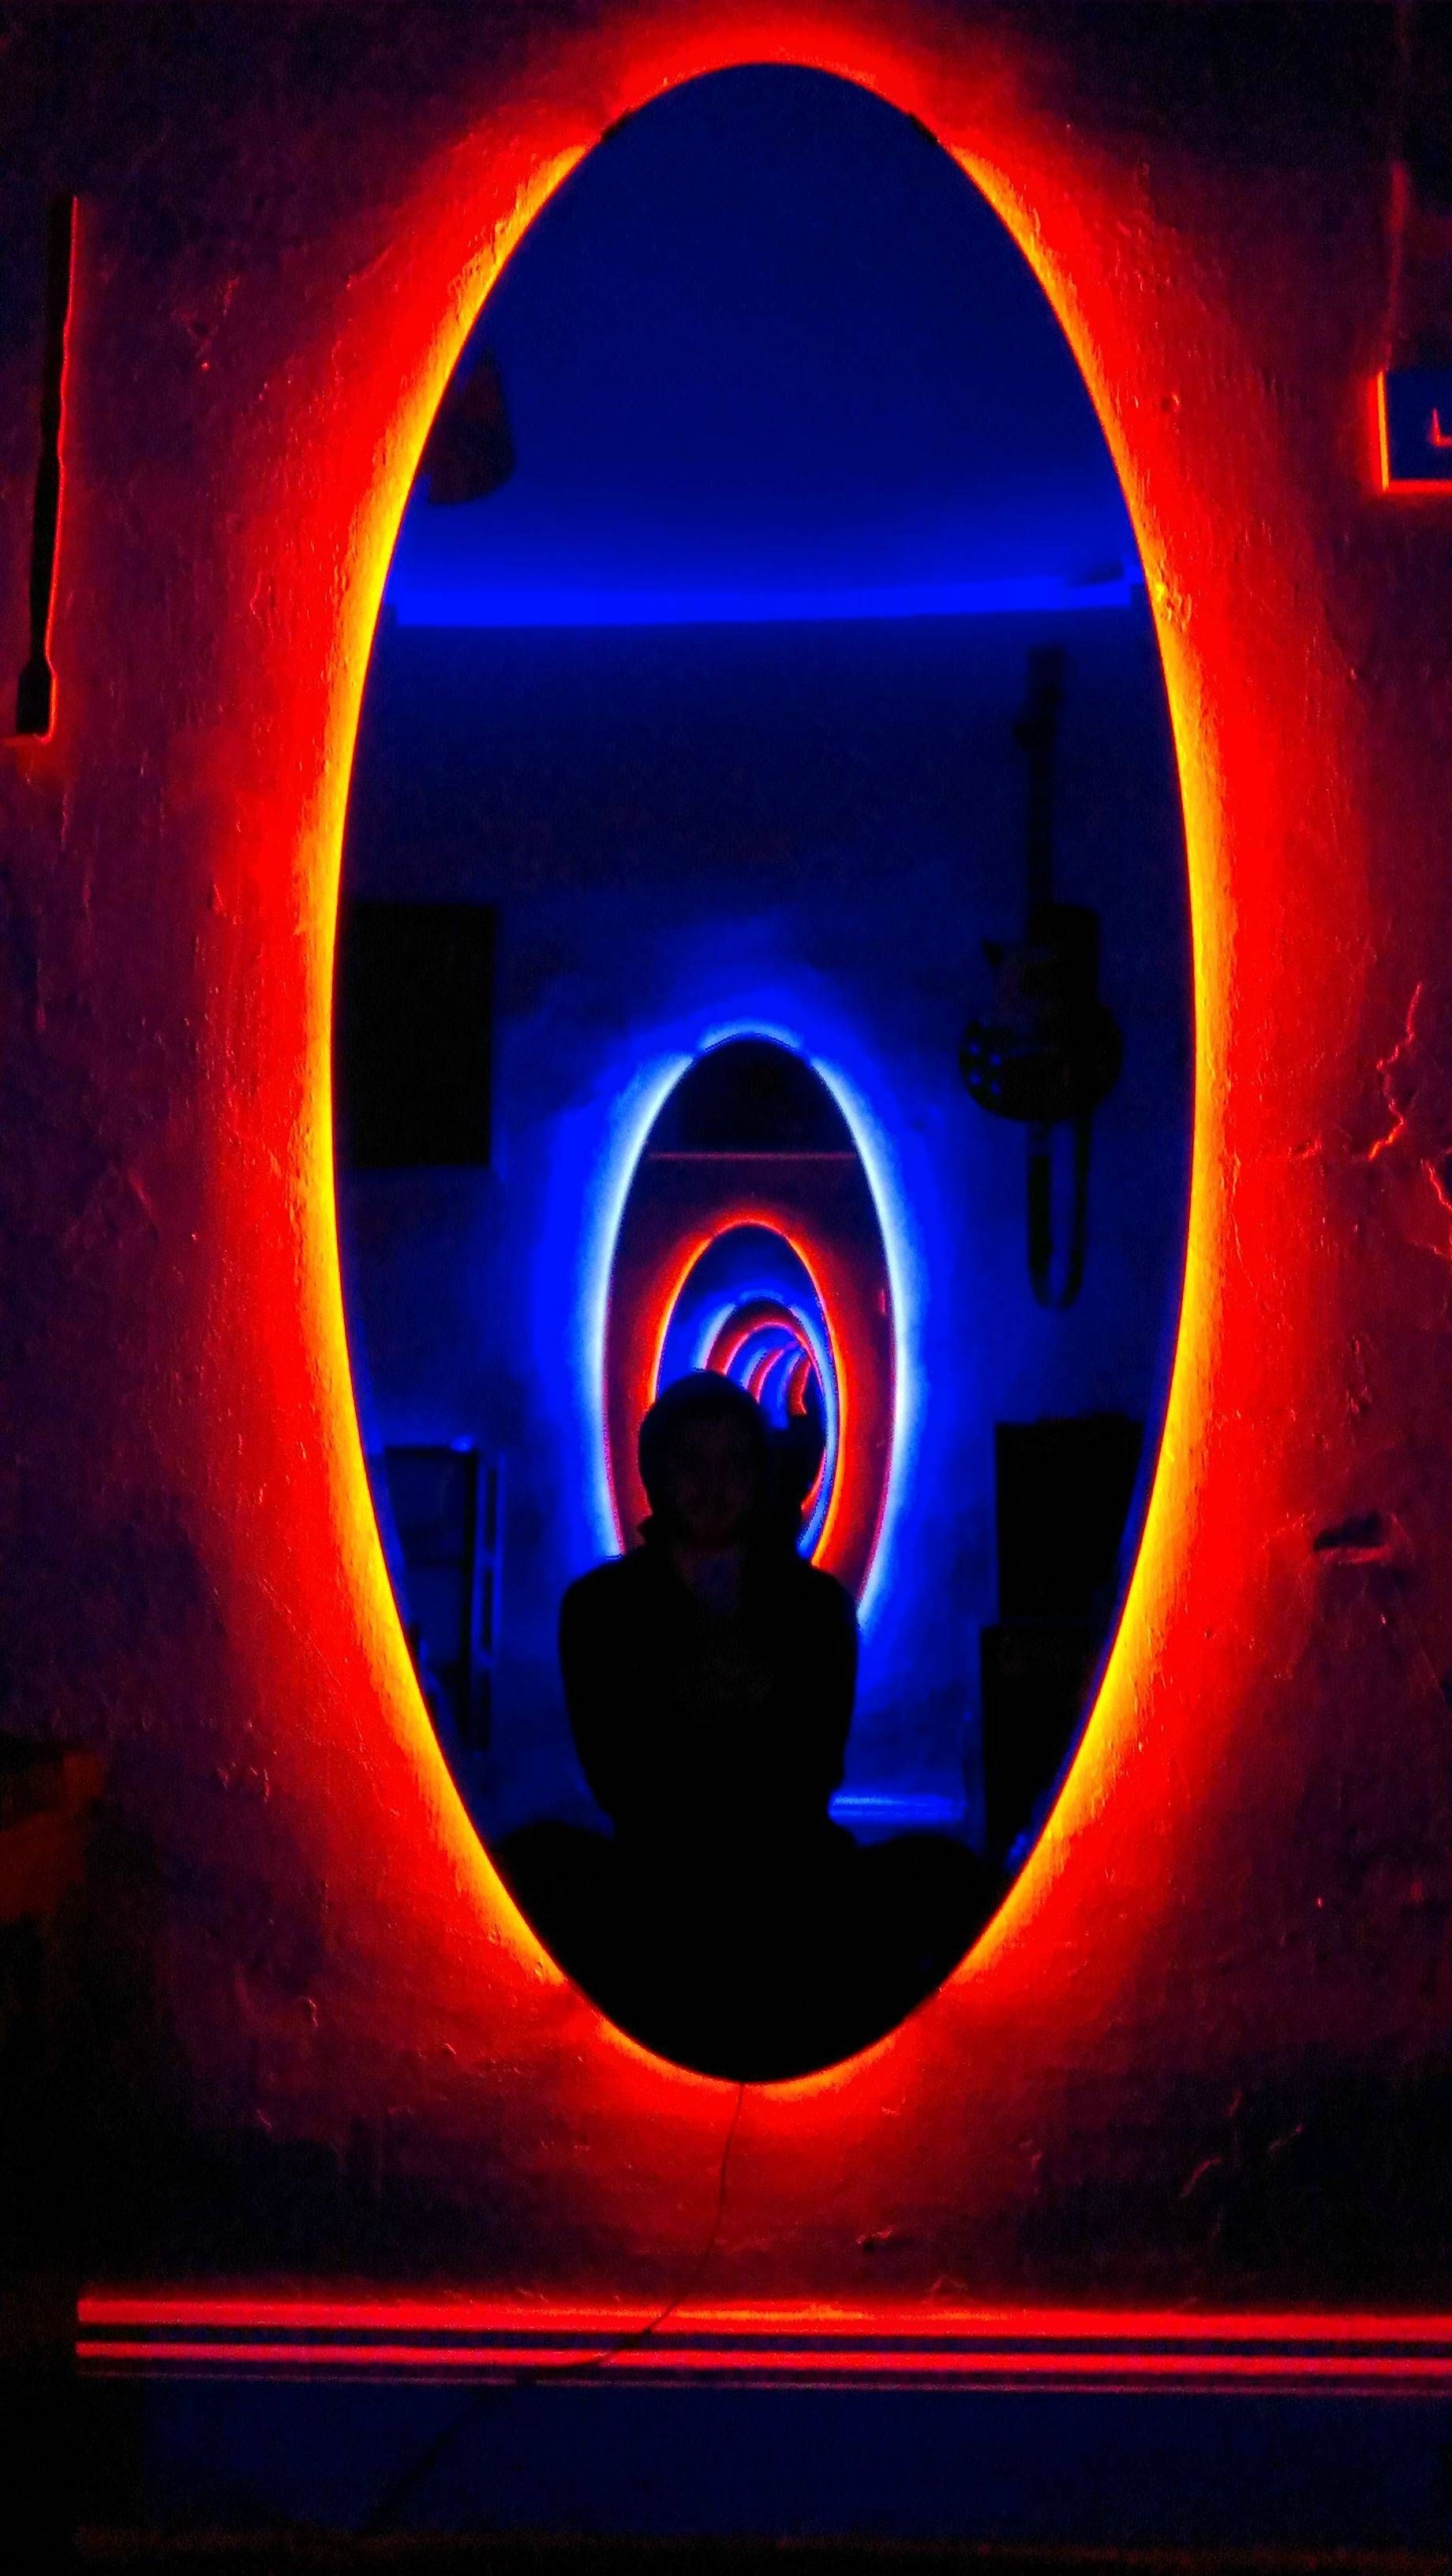 Time travel portal this diy display transforms ordinary mirrors into